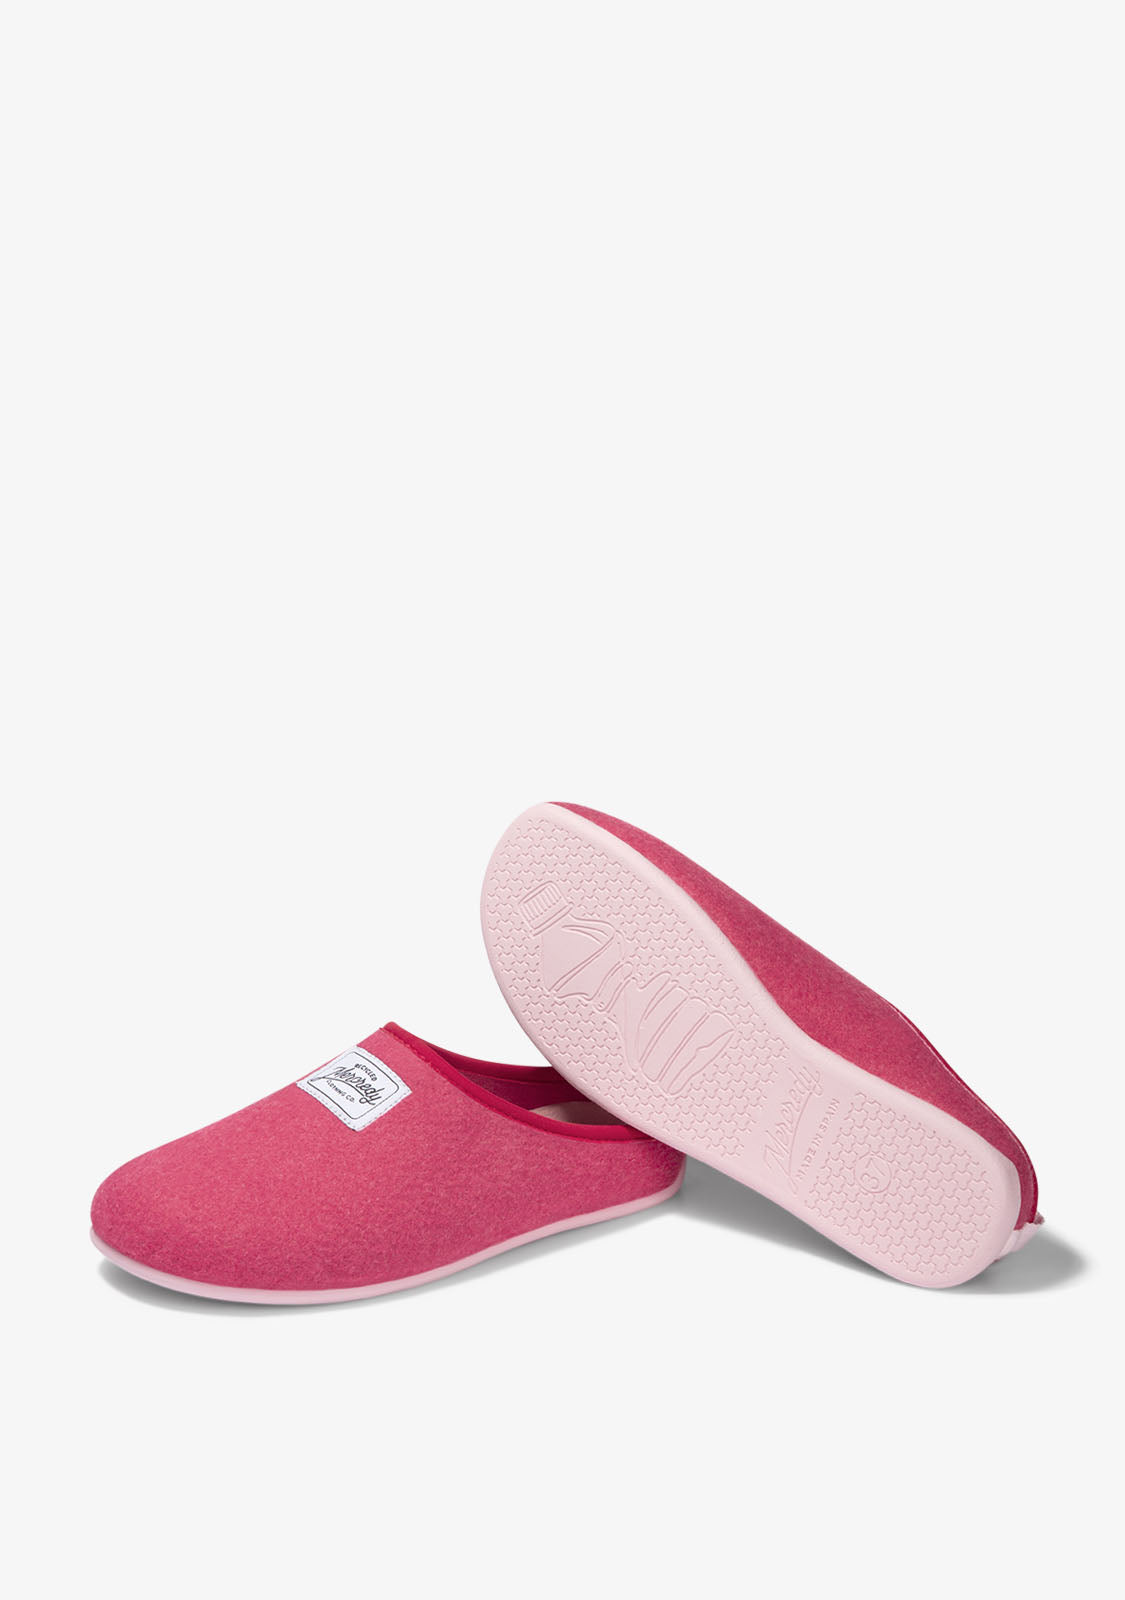 Mercredy Slipper Fuxia / Pink